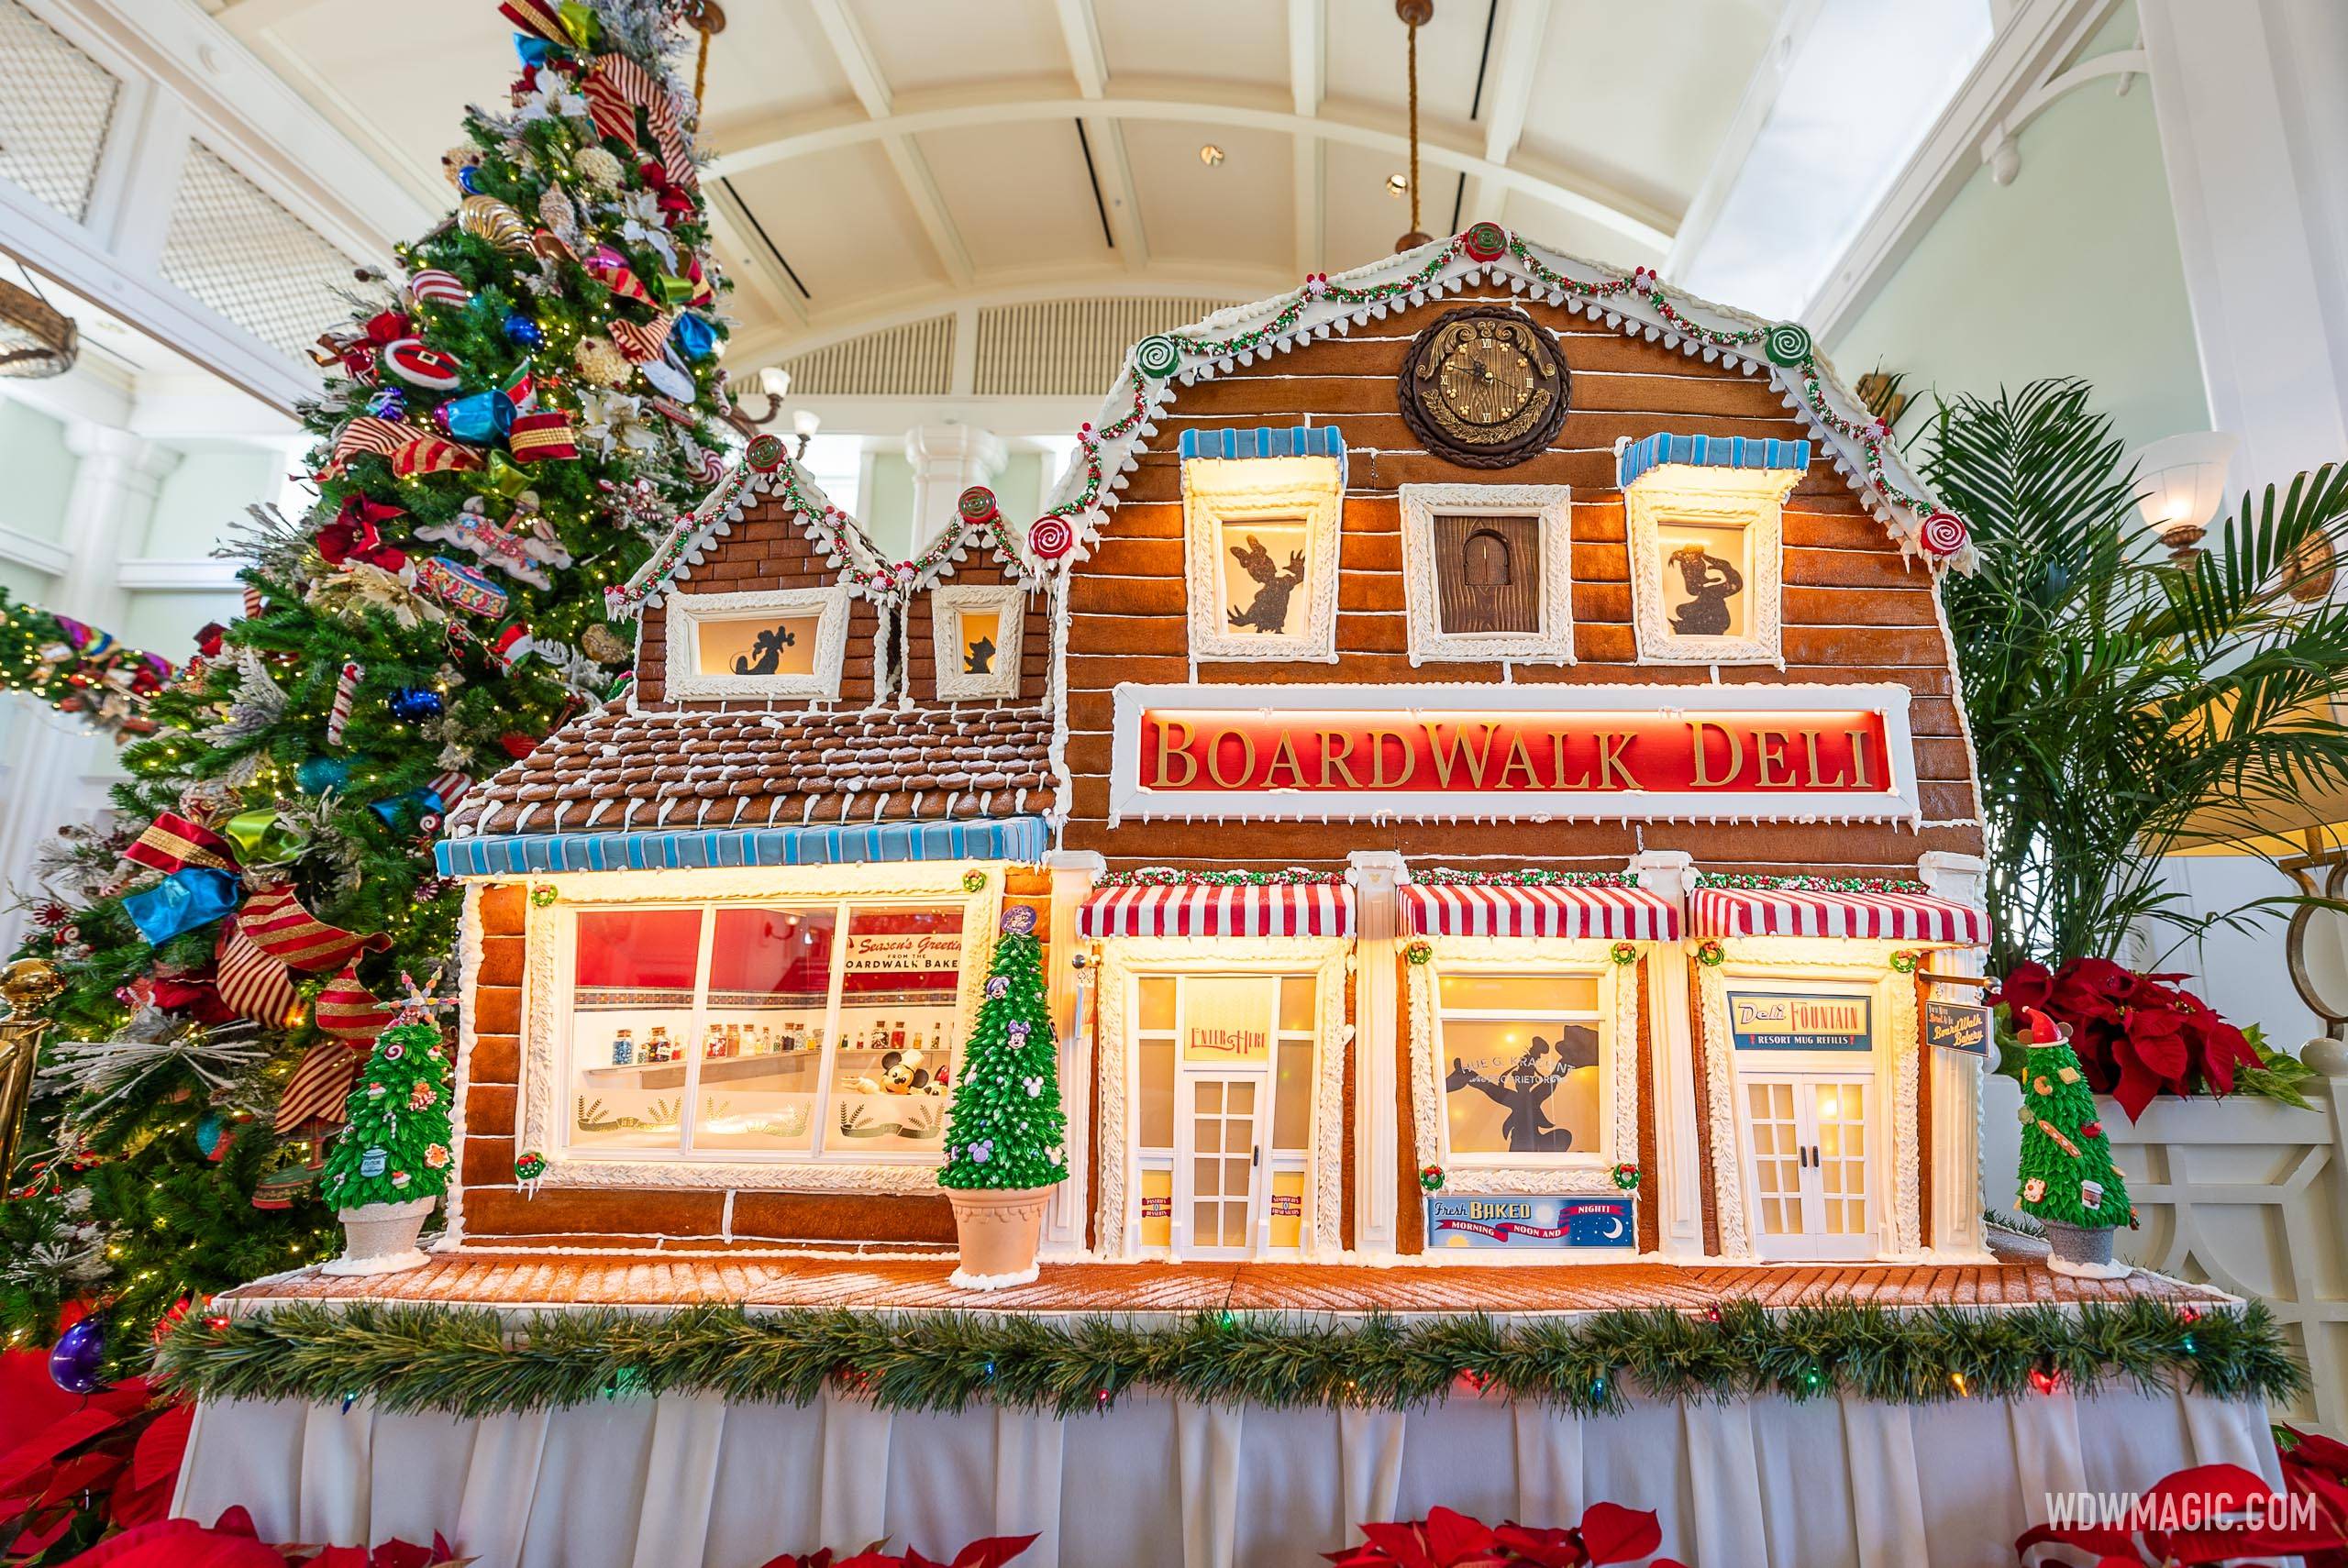 Disney's BoardWalk Gingerbread House features a surprise appearance by Orange Bird